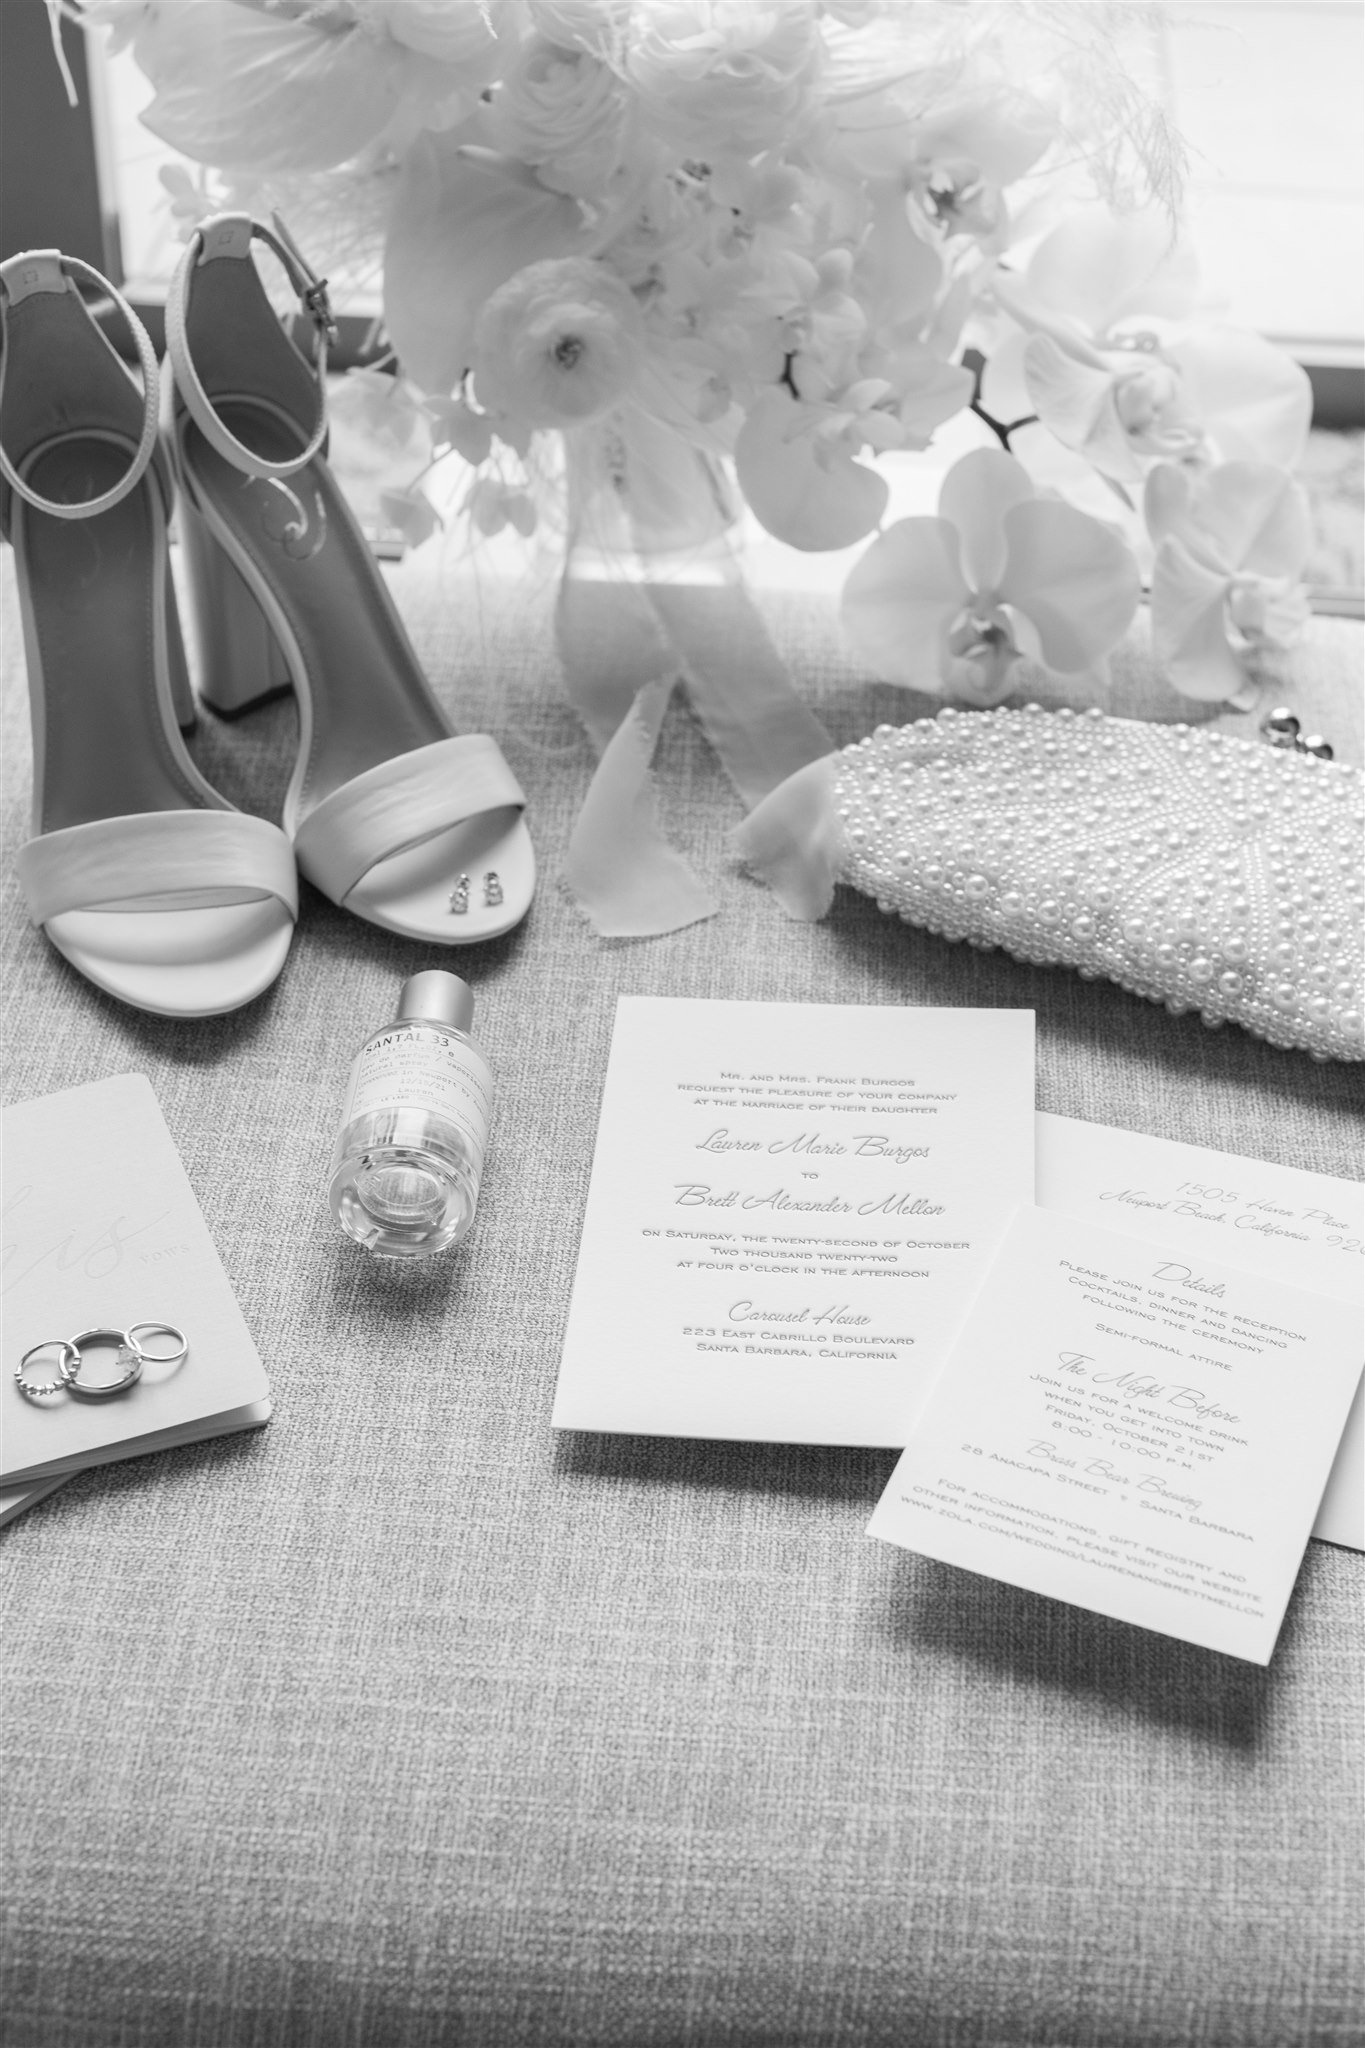 www.santabarbarawedding.com | Events by Fran | Wonder Tribe | Santa Barbara Courthouse | Studio Restore | Bride’s Accessories and Wedding Invitations 